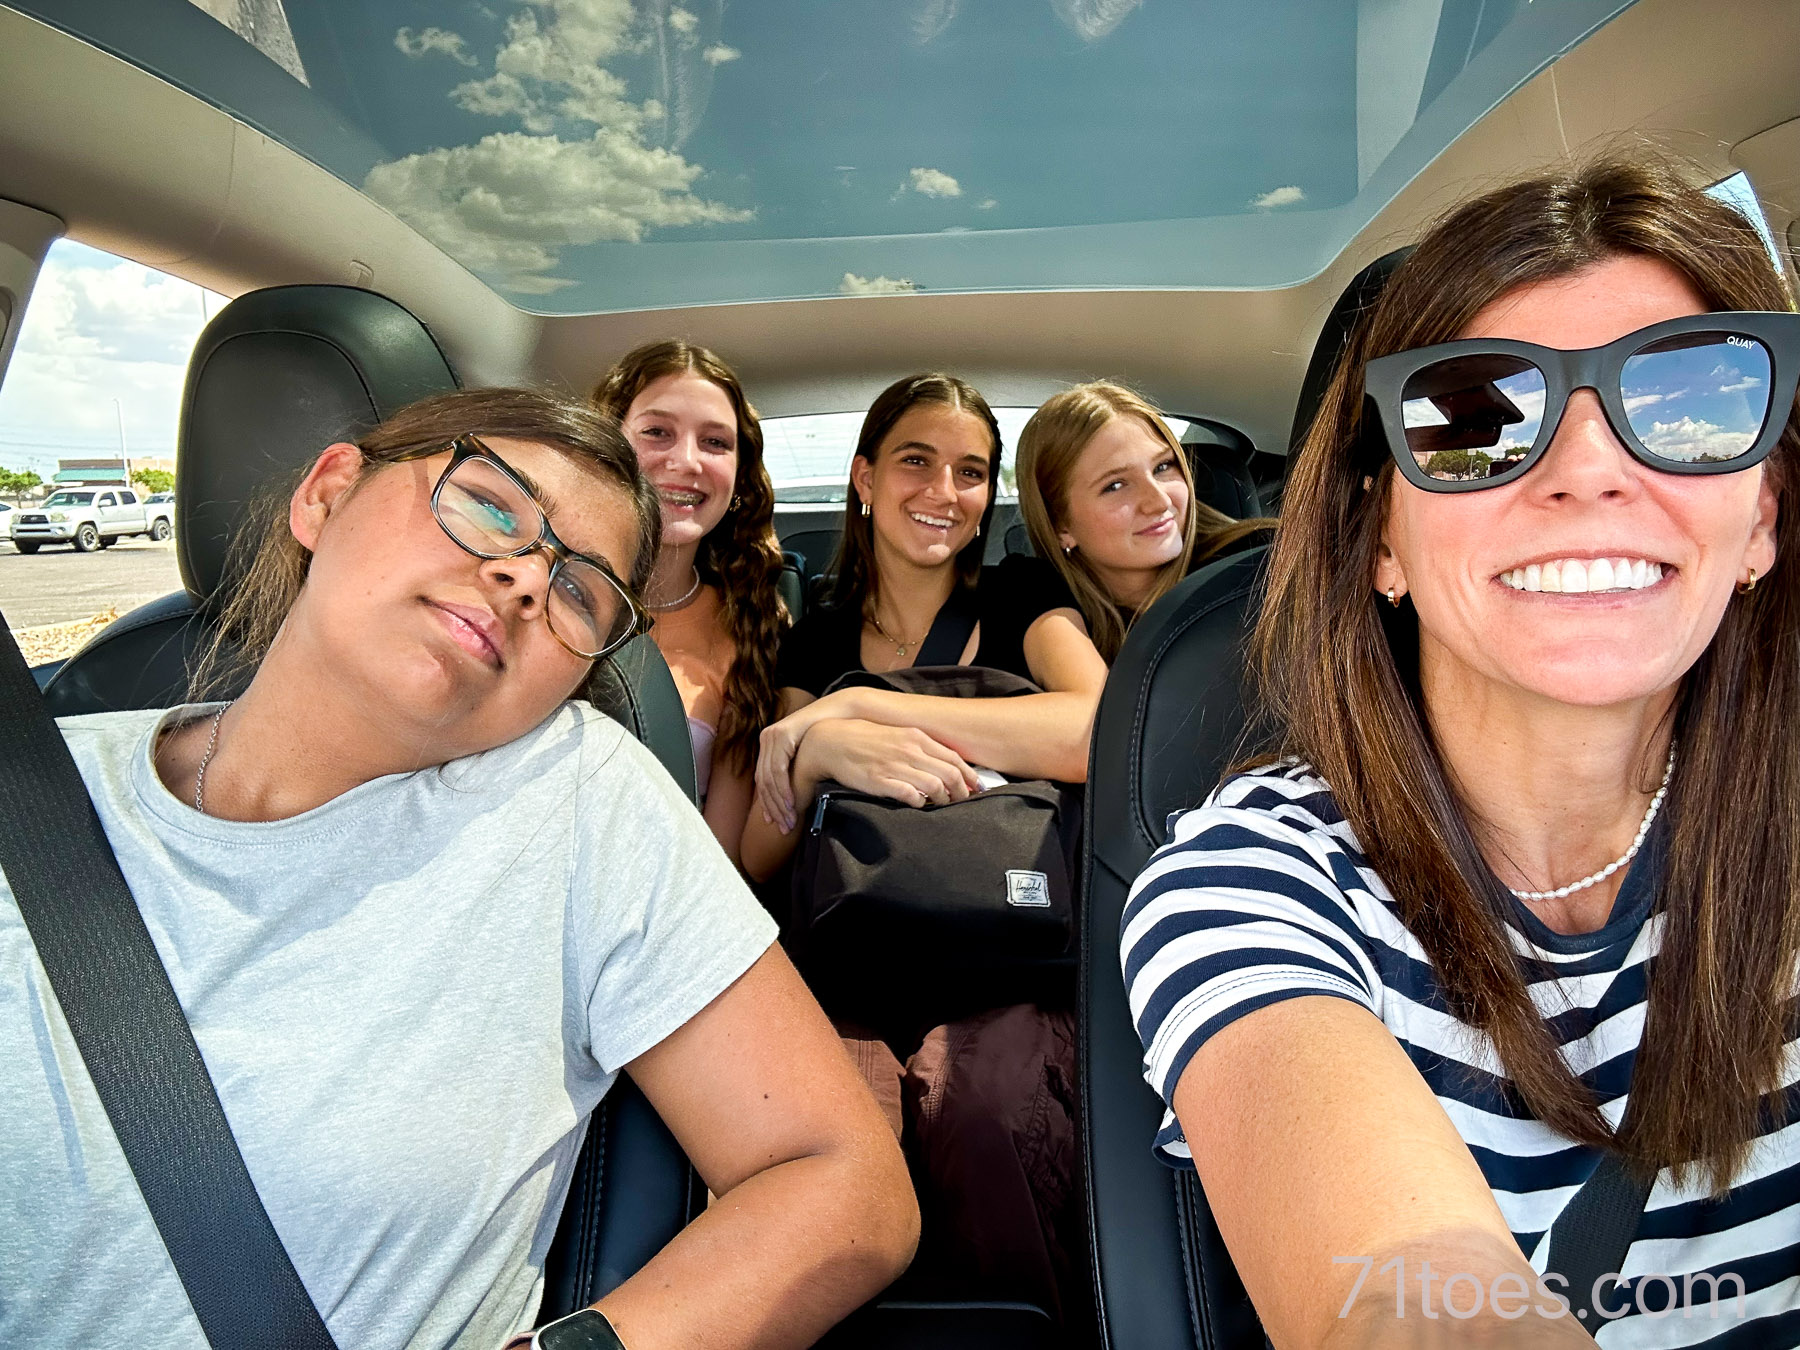 Shawni driving with the carpool girls